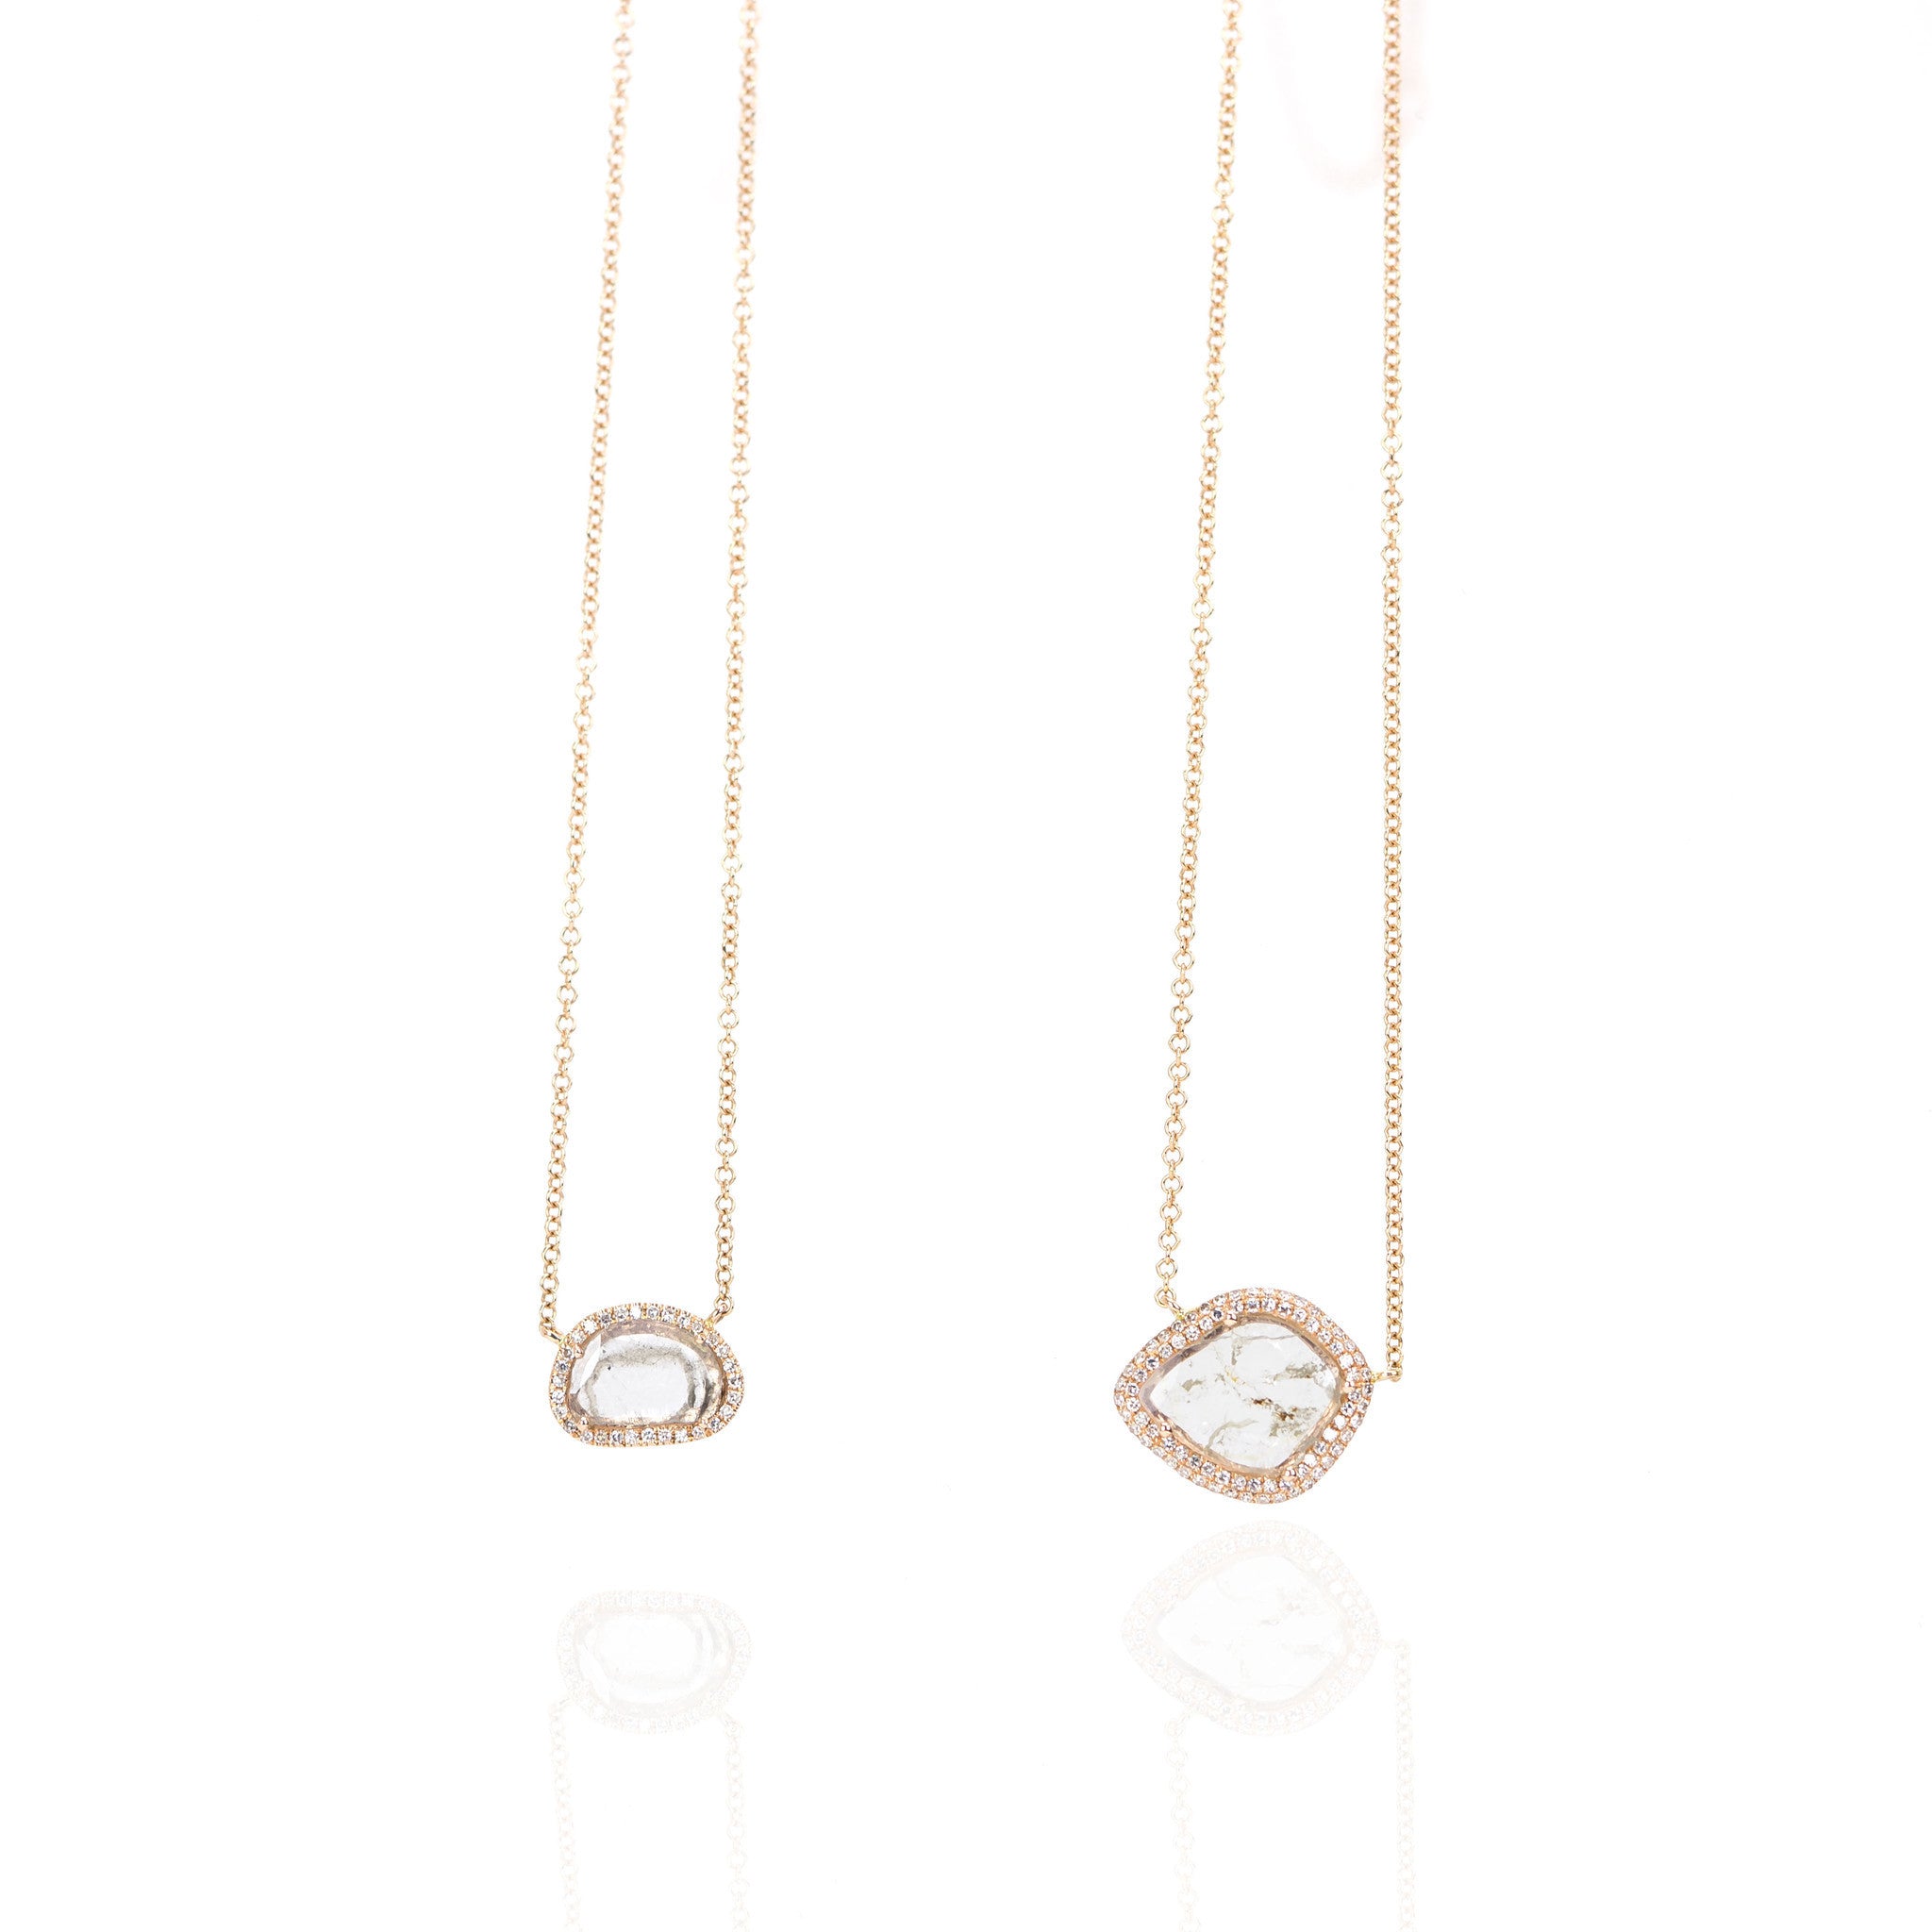 Diamond Slice Pendant with Pave Bezel Necklace by Atheria Jewelry